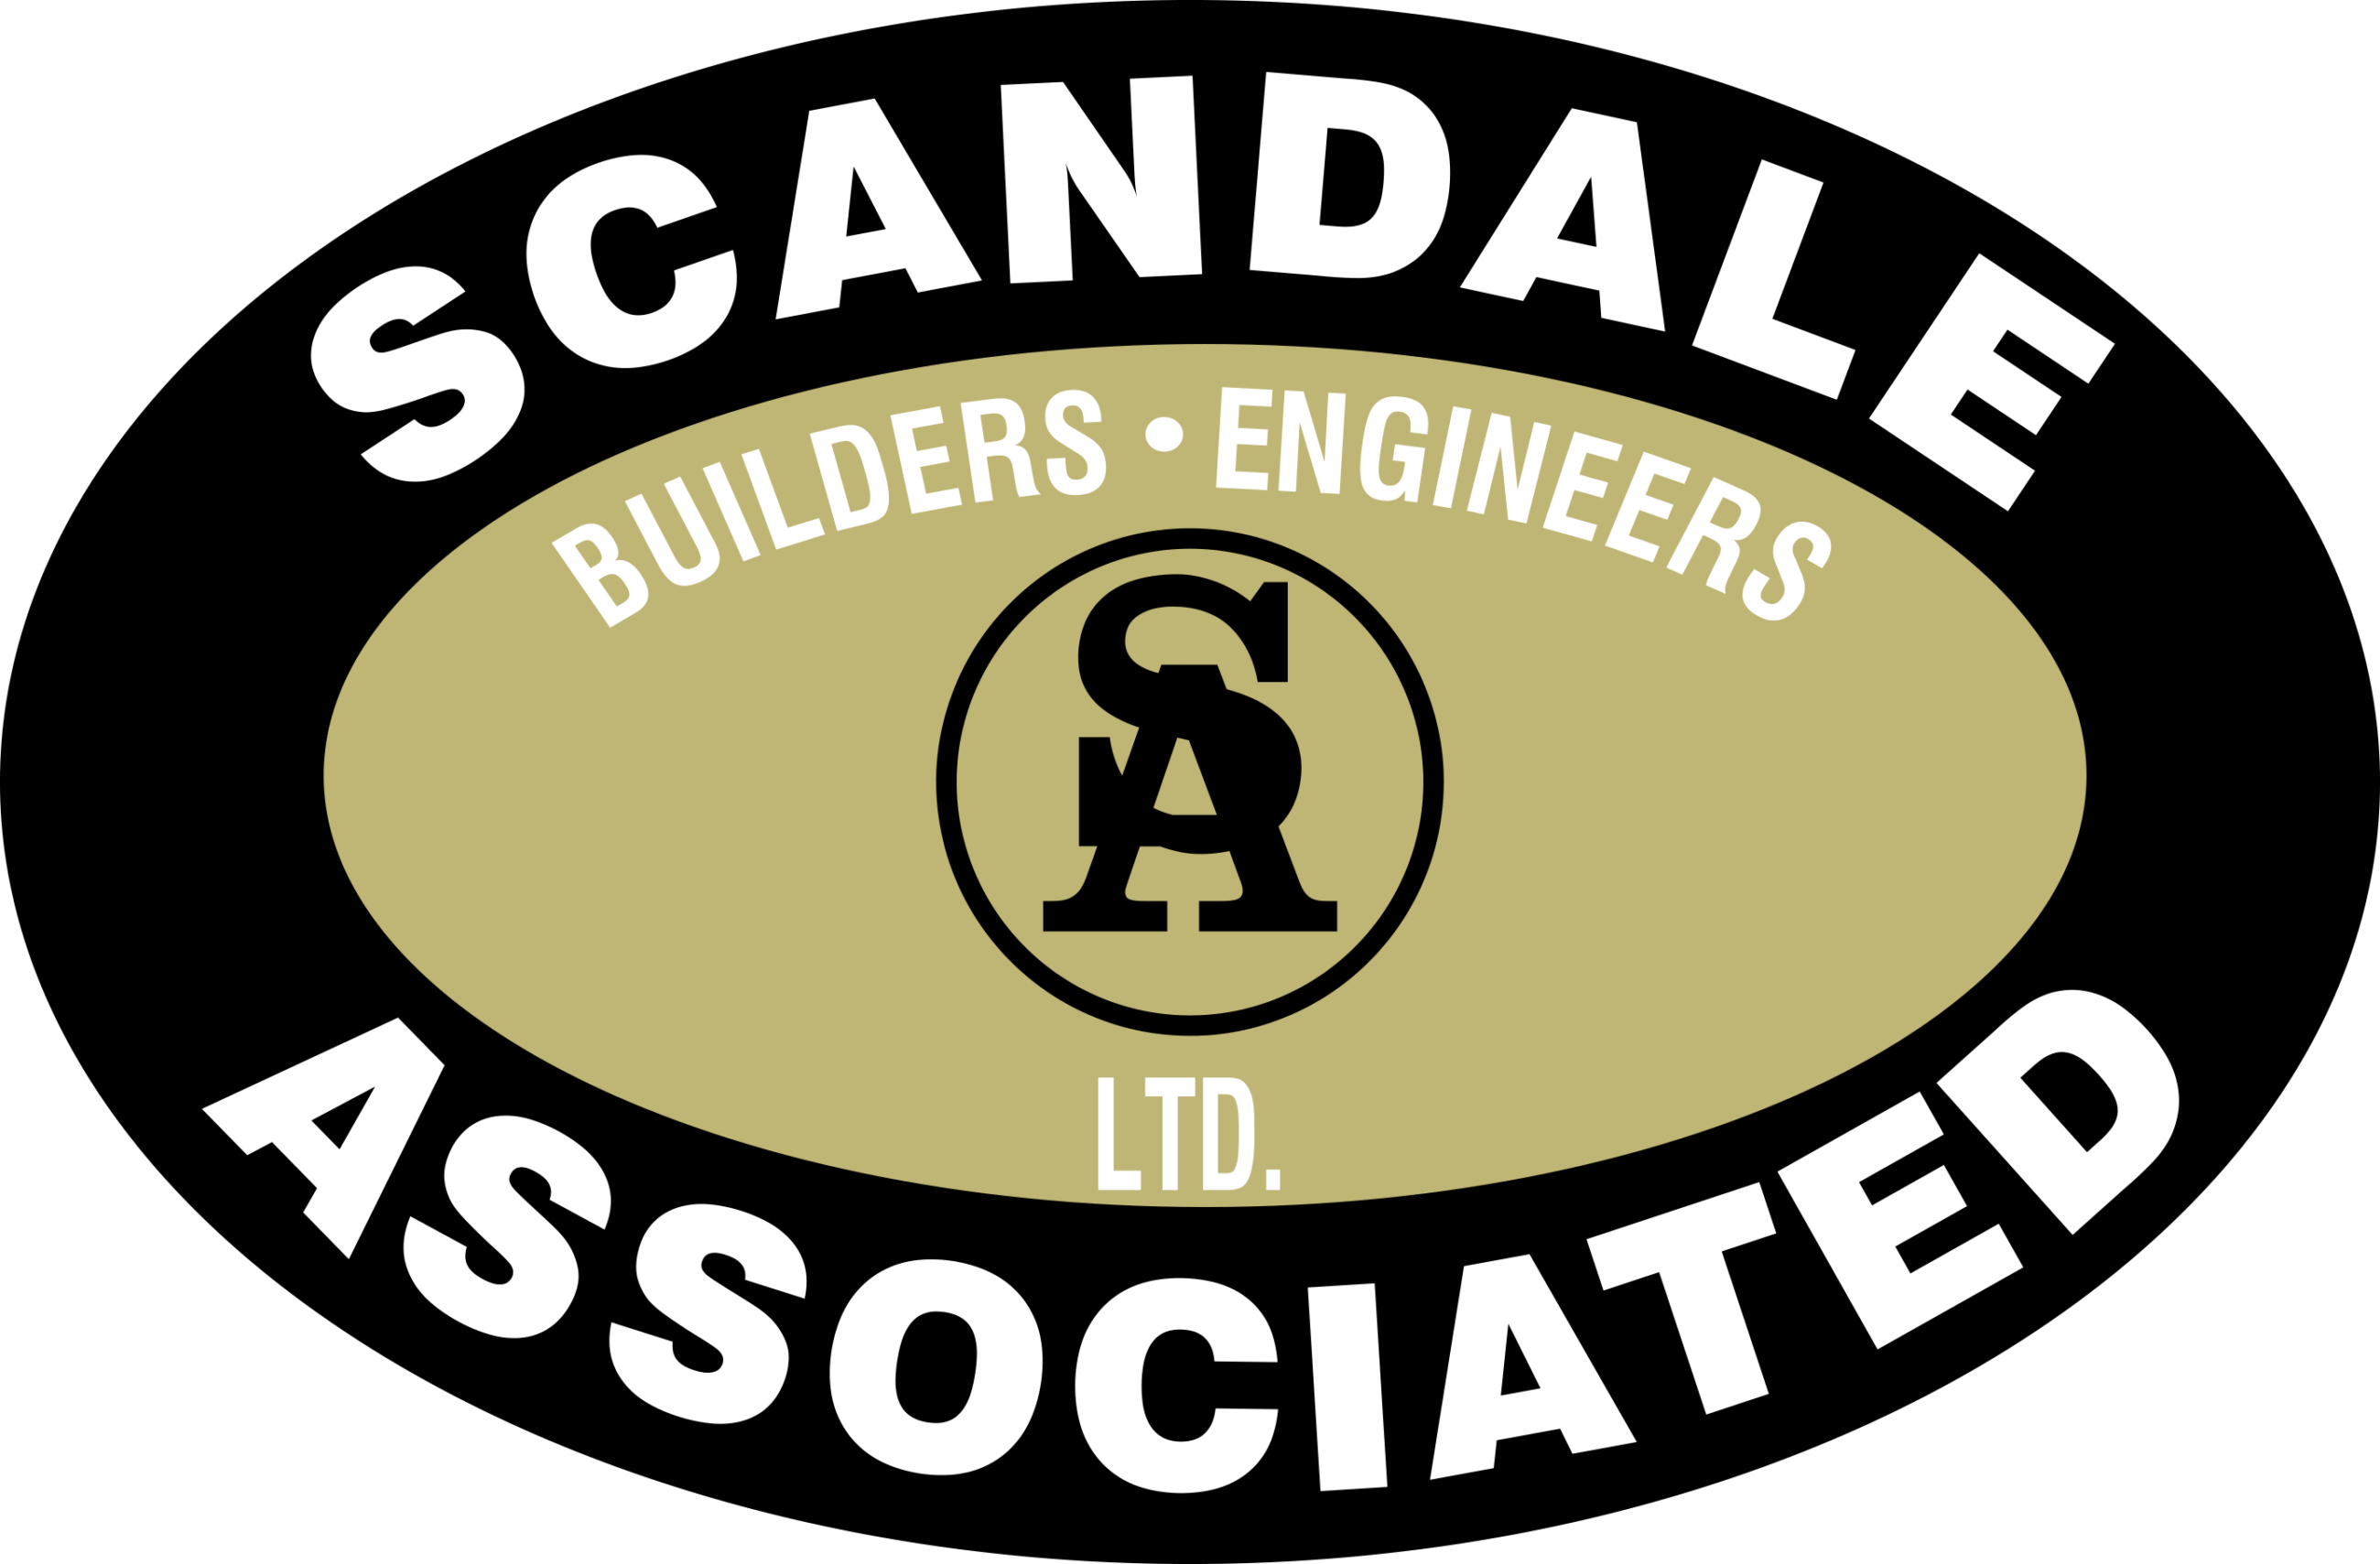 scandale logo